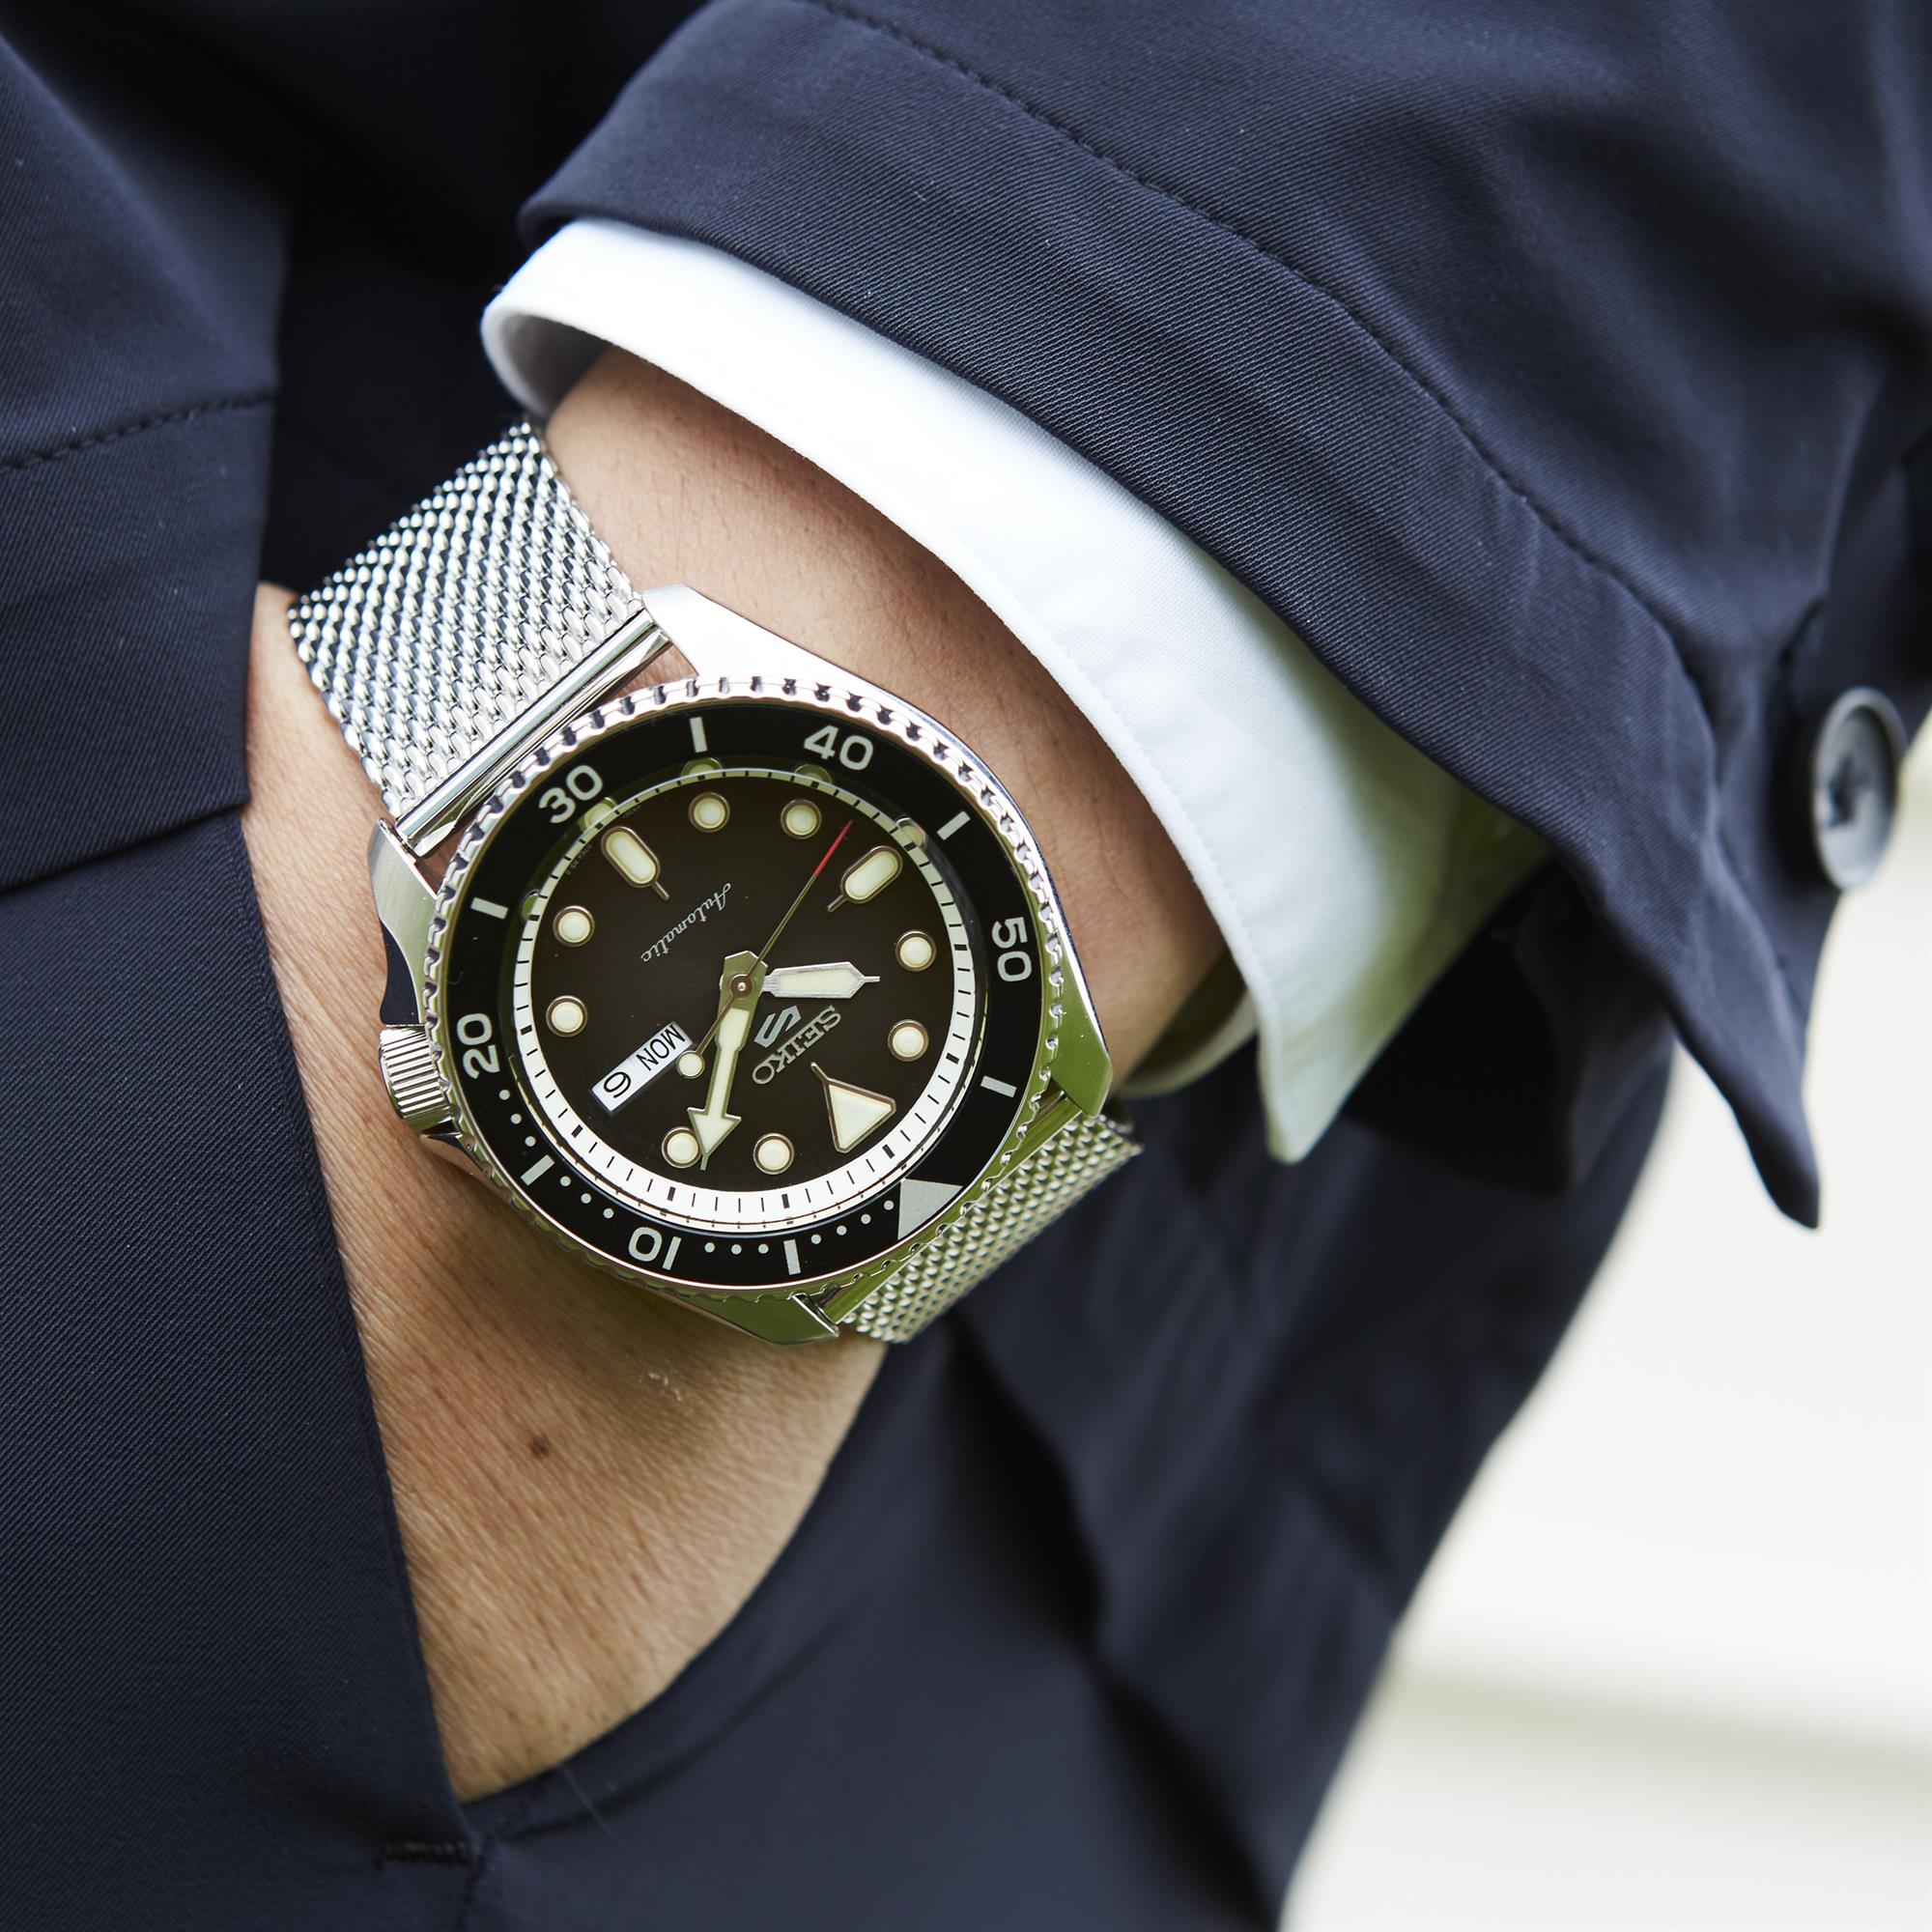 Milanese Bond Mesh Bracelet Strap For Seiko Watch - LuxuryWatchStraps 20mm